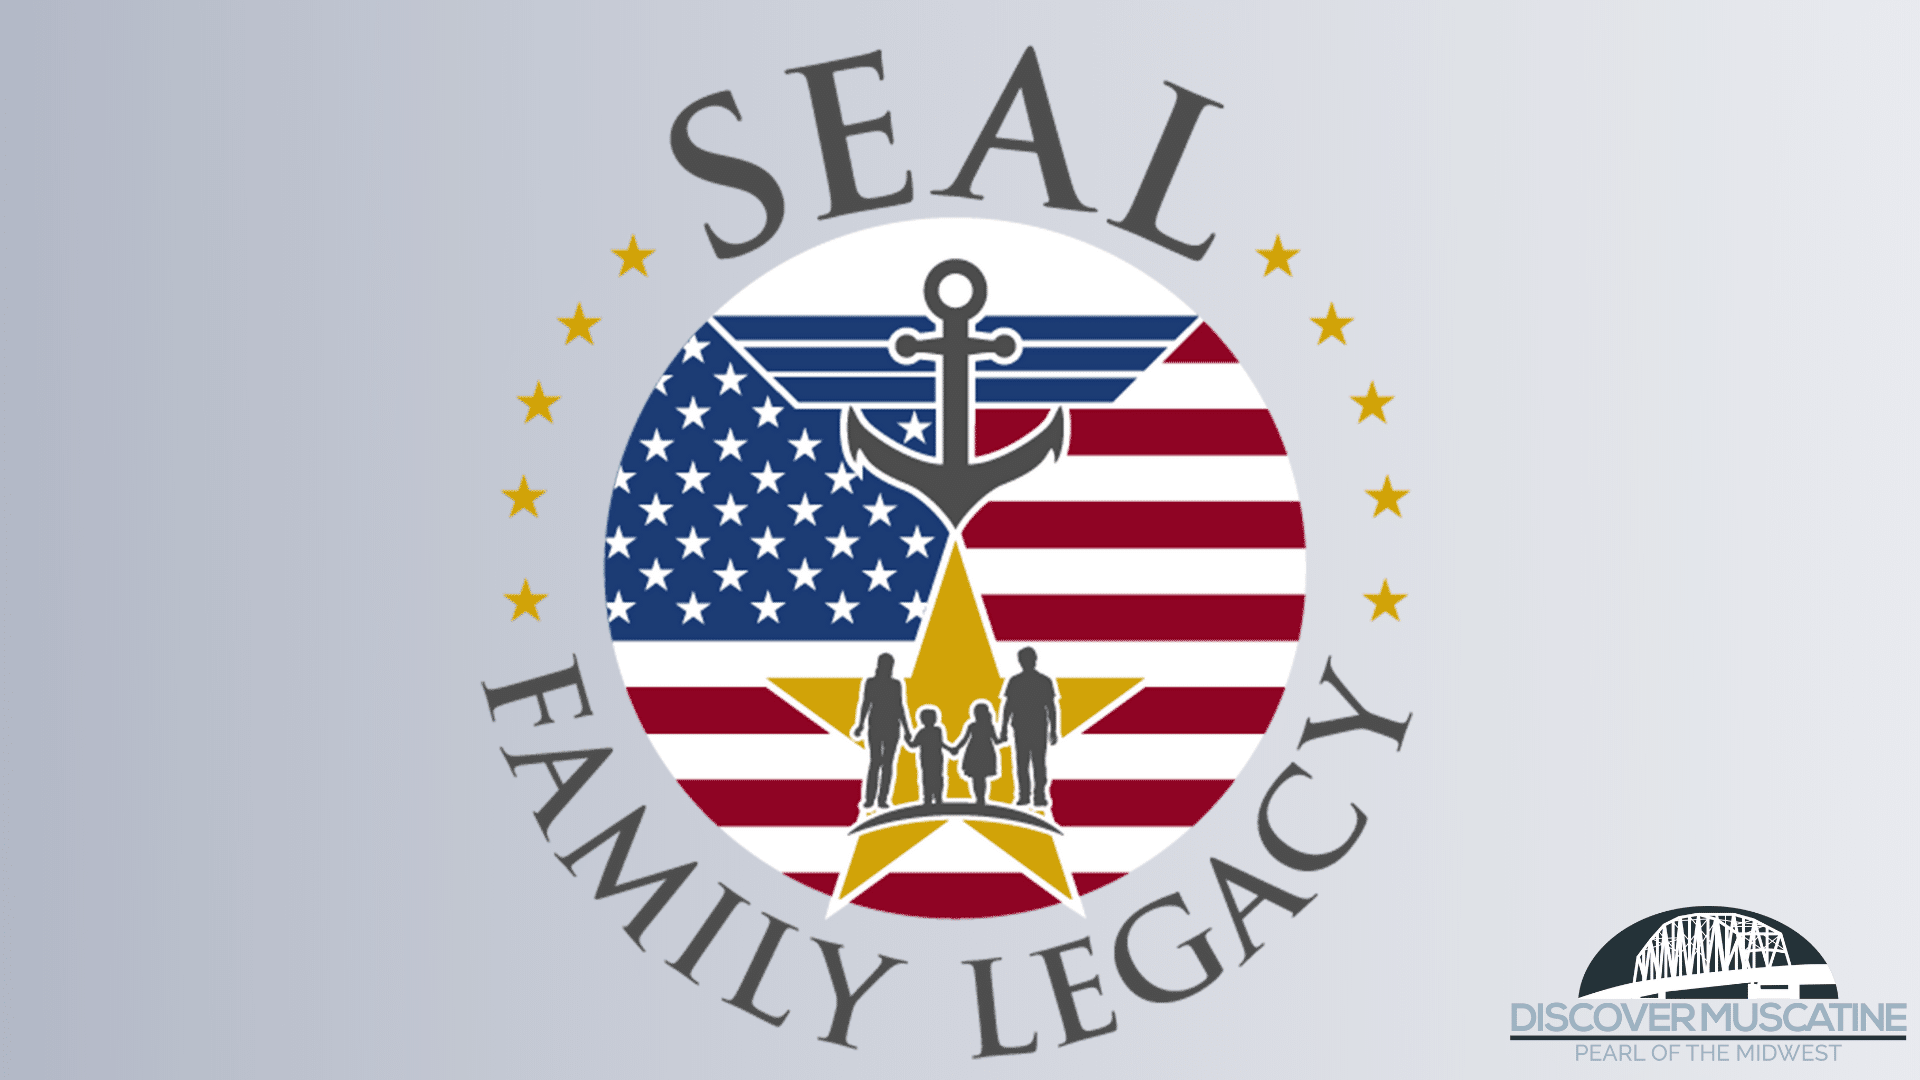 SEAL Family Legacy announces inaugural legacy ride